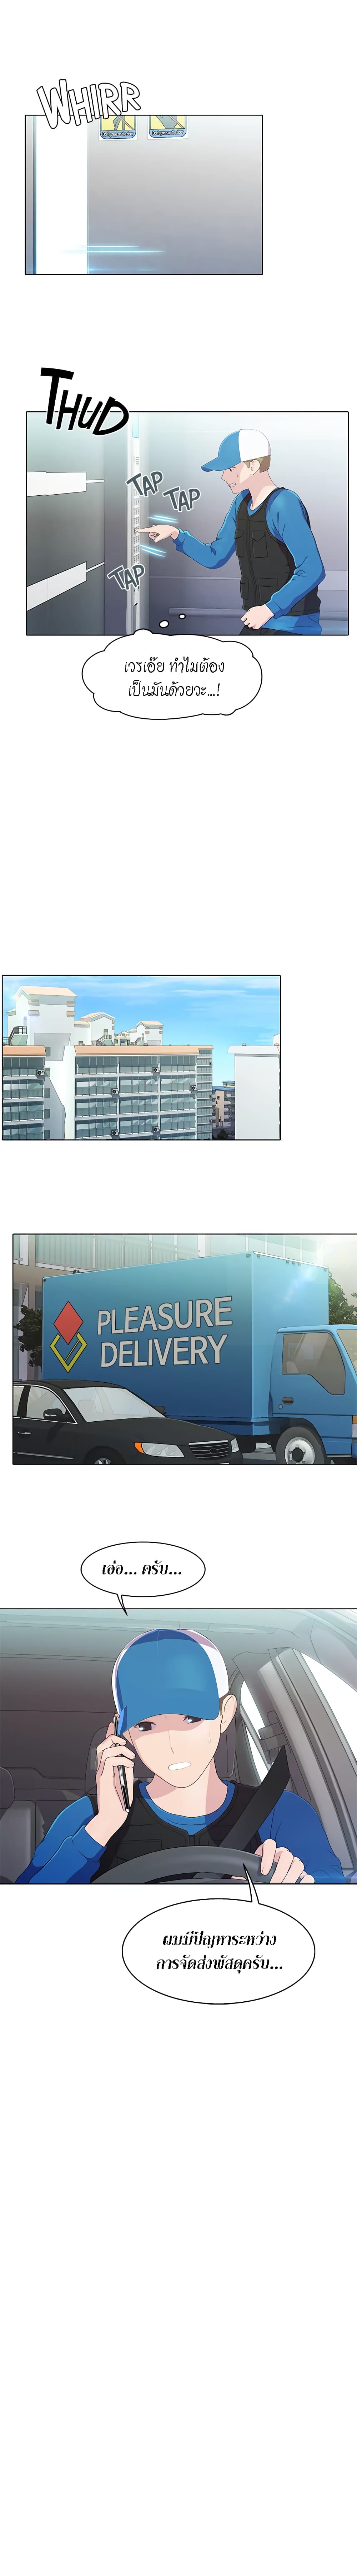 Pleasure Delivery